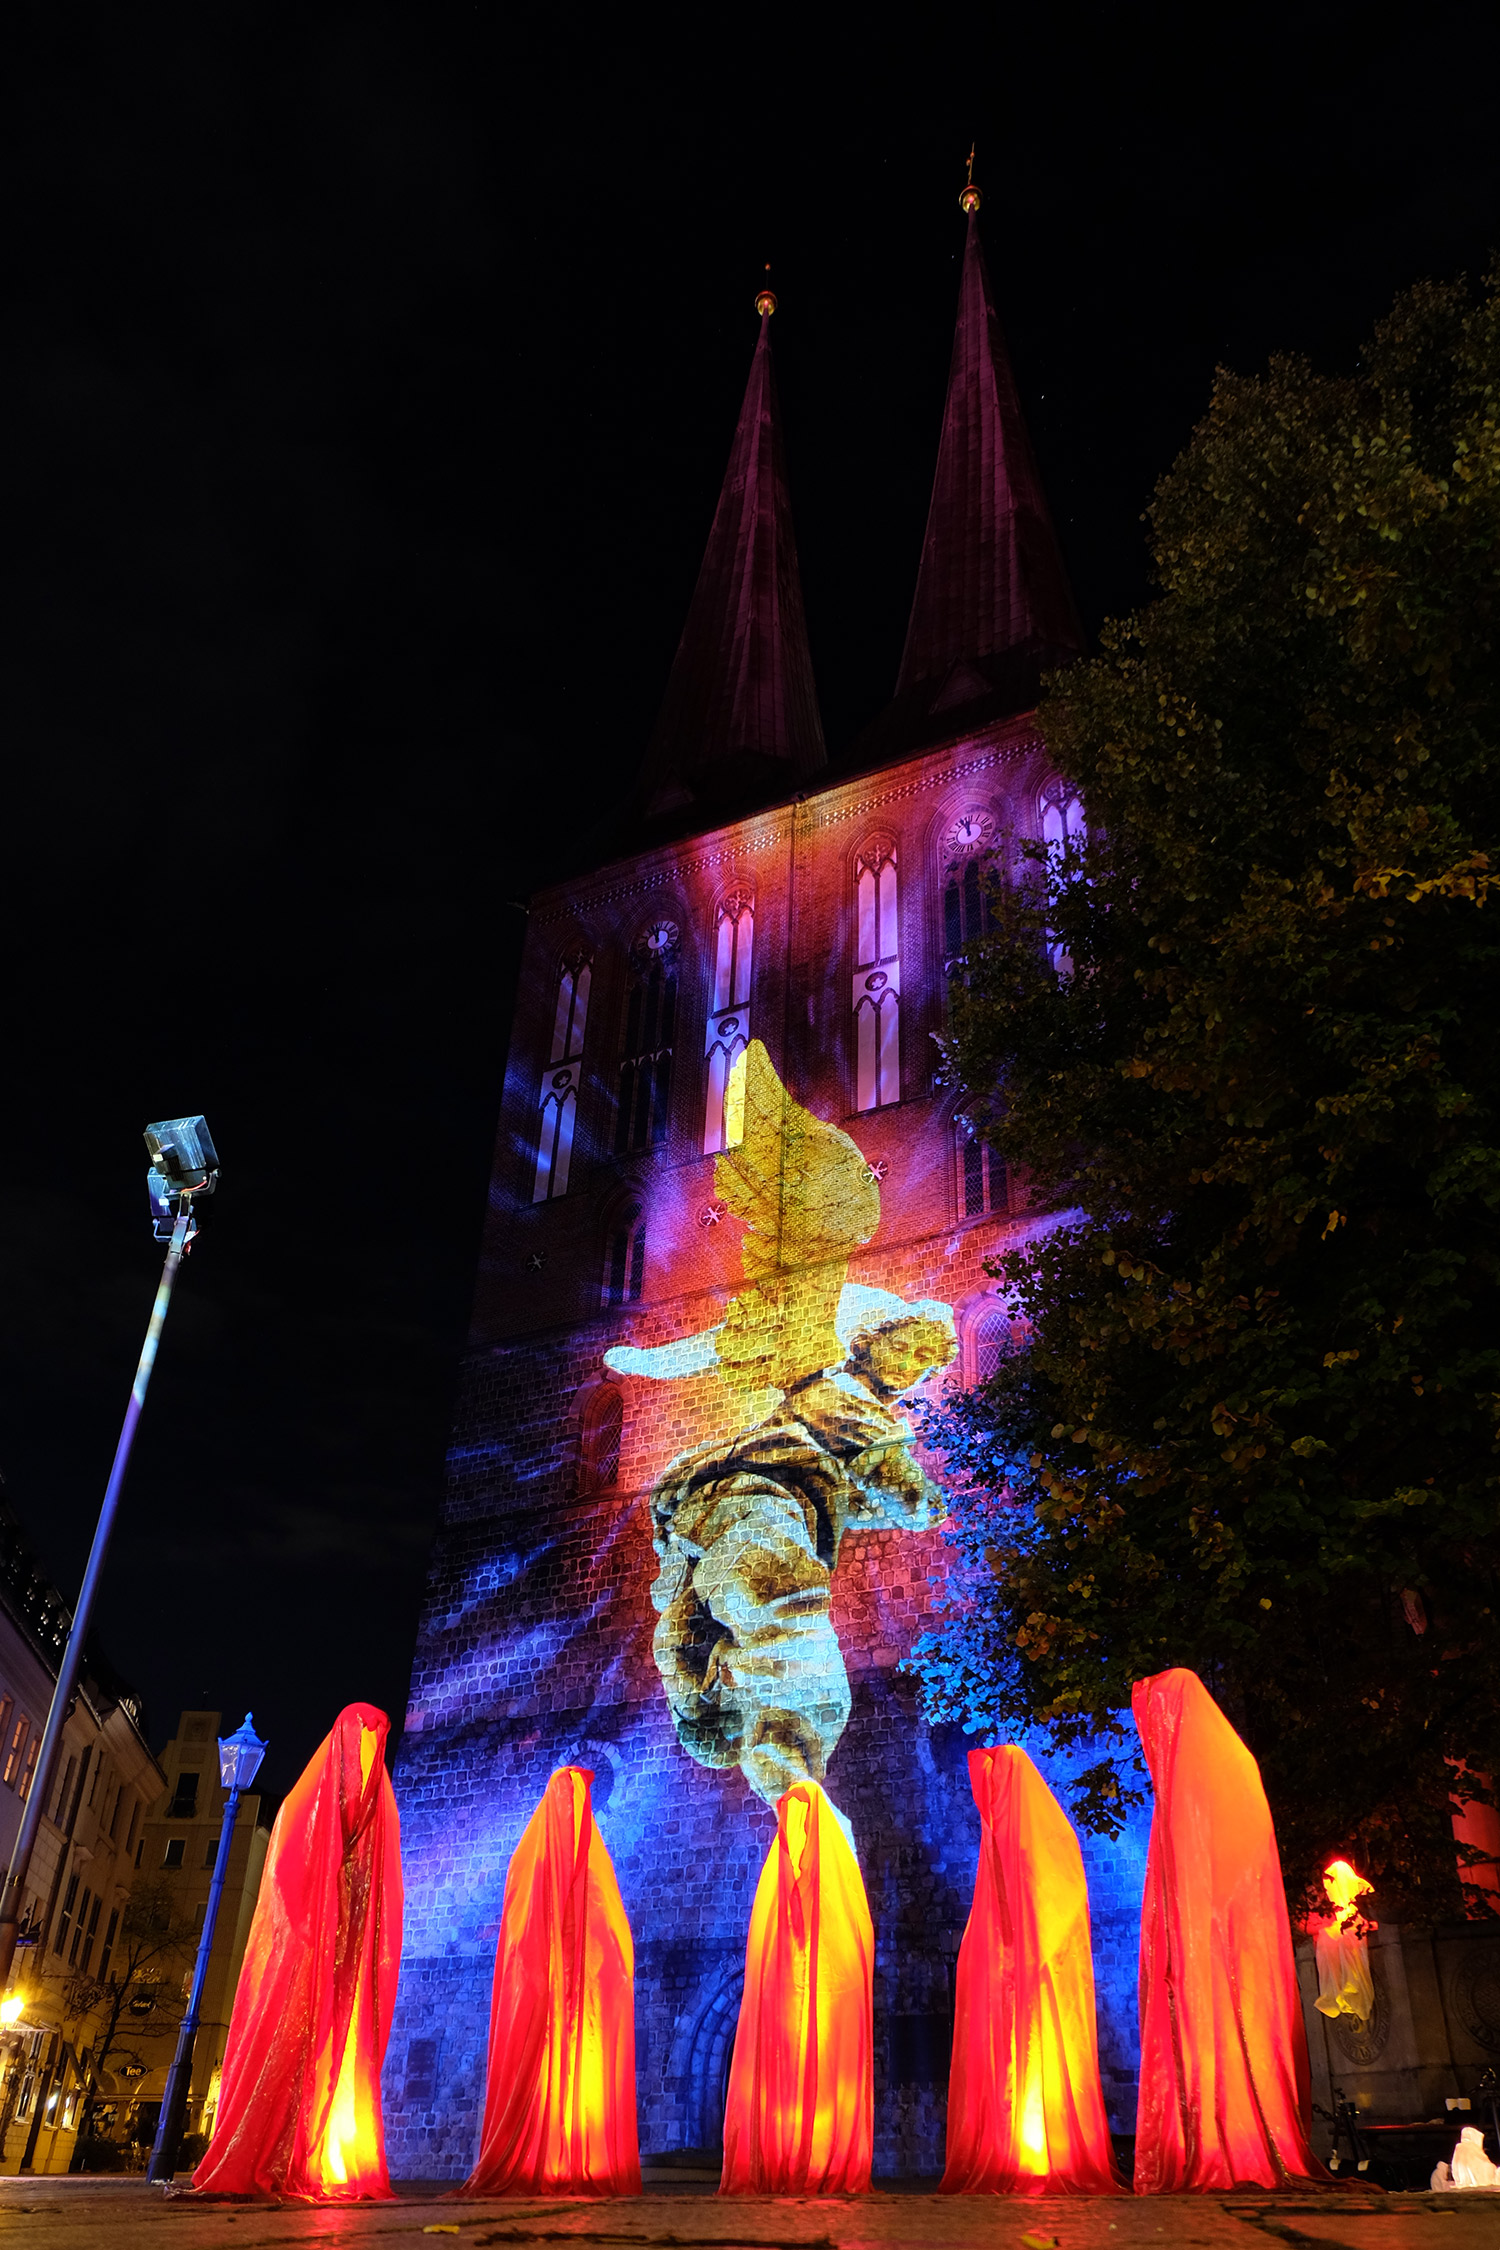 festival-of-lights-berlin-light-art-fine-arts-contemporary-sculpture-glow-guardians-of-time-manfred-kili-kielnhofer-statue-gallery-museum-festival-9026y